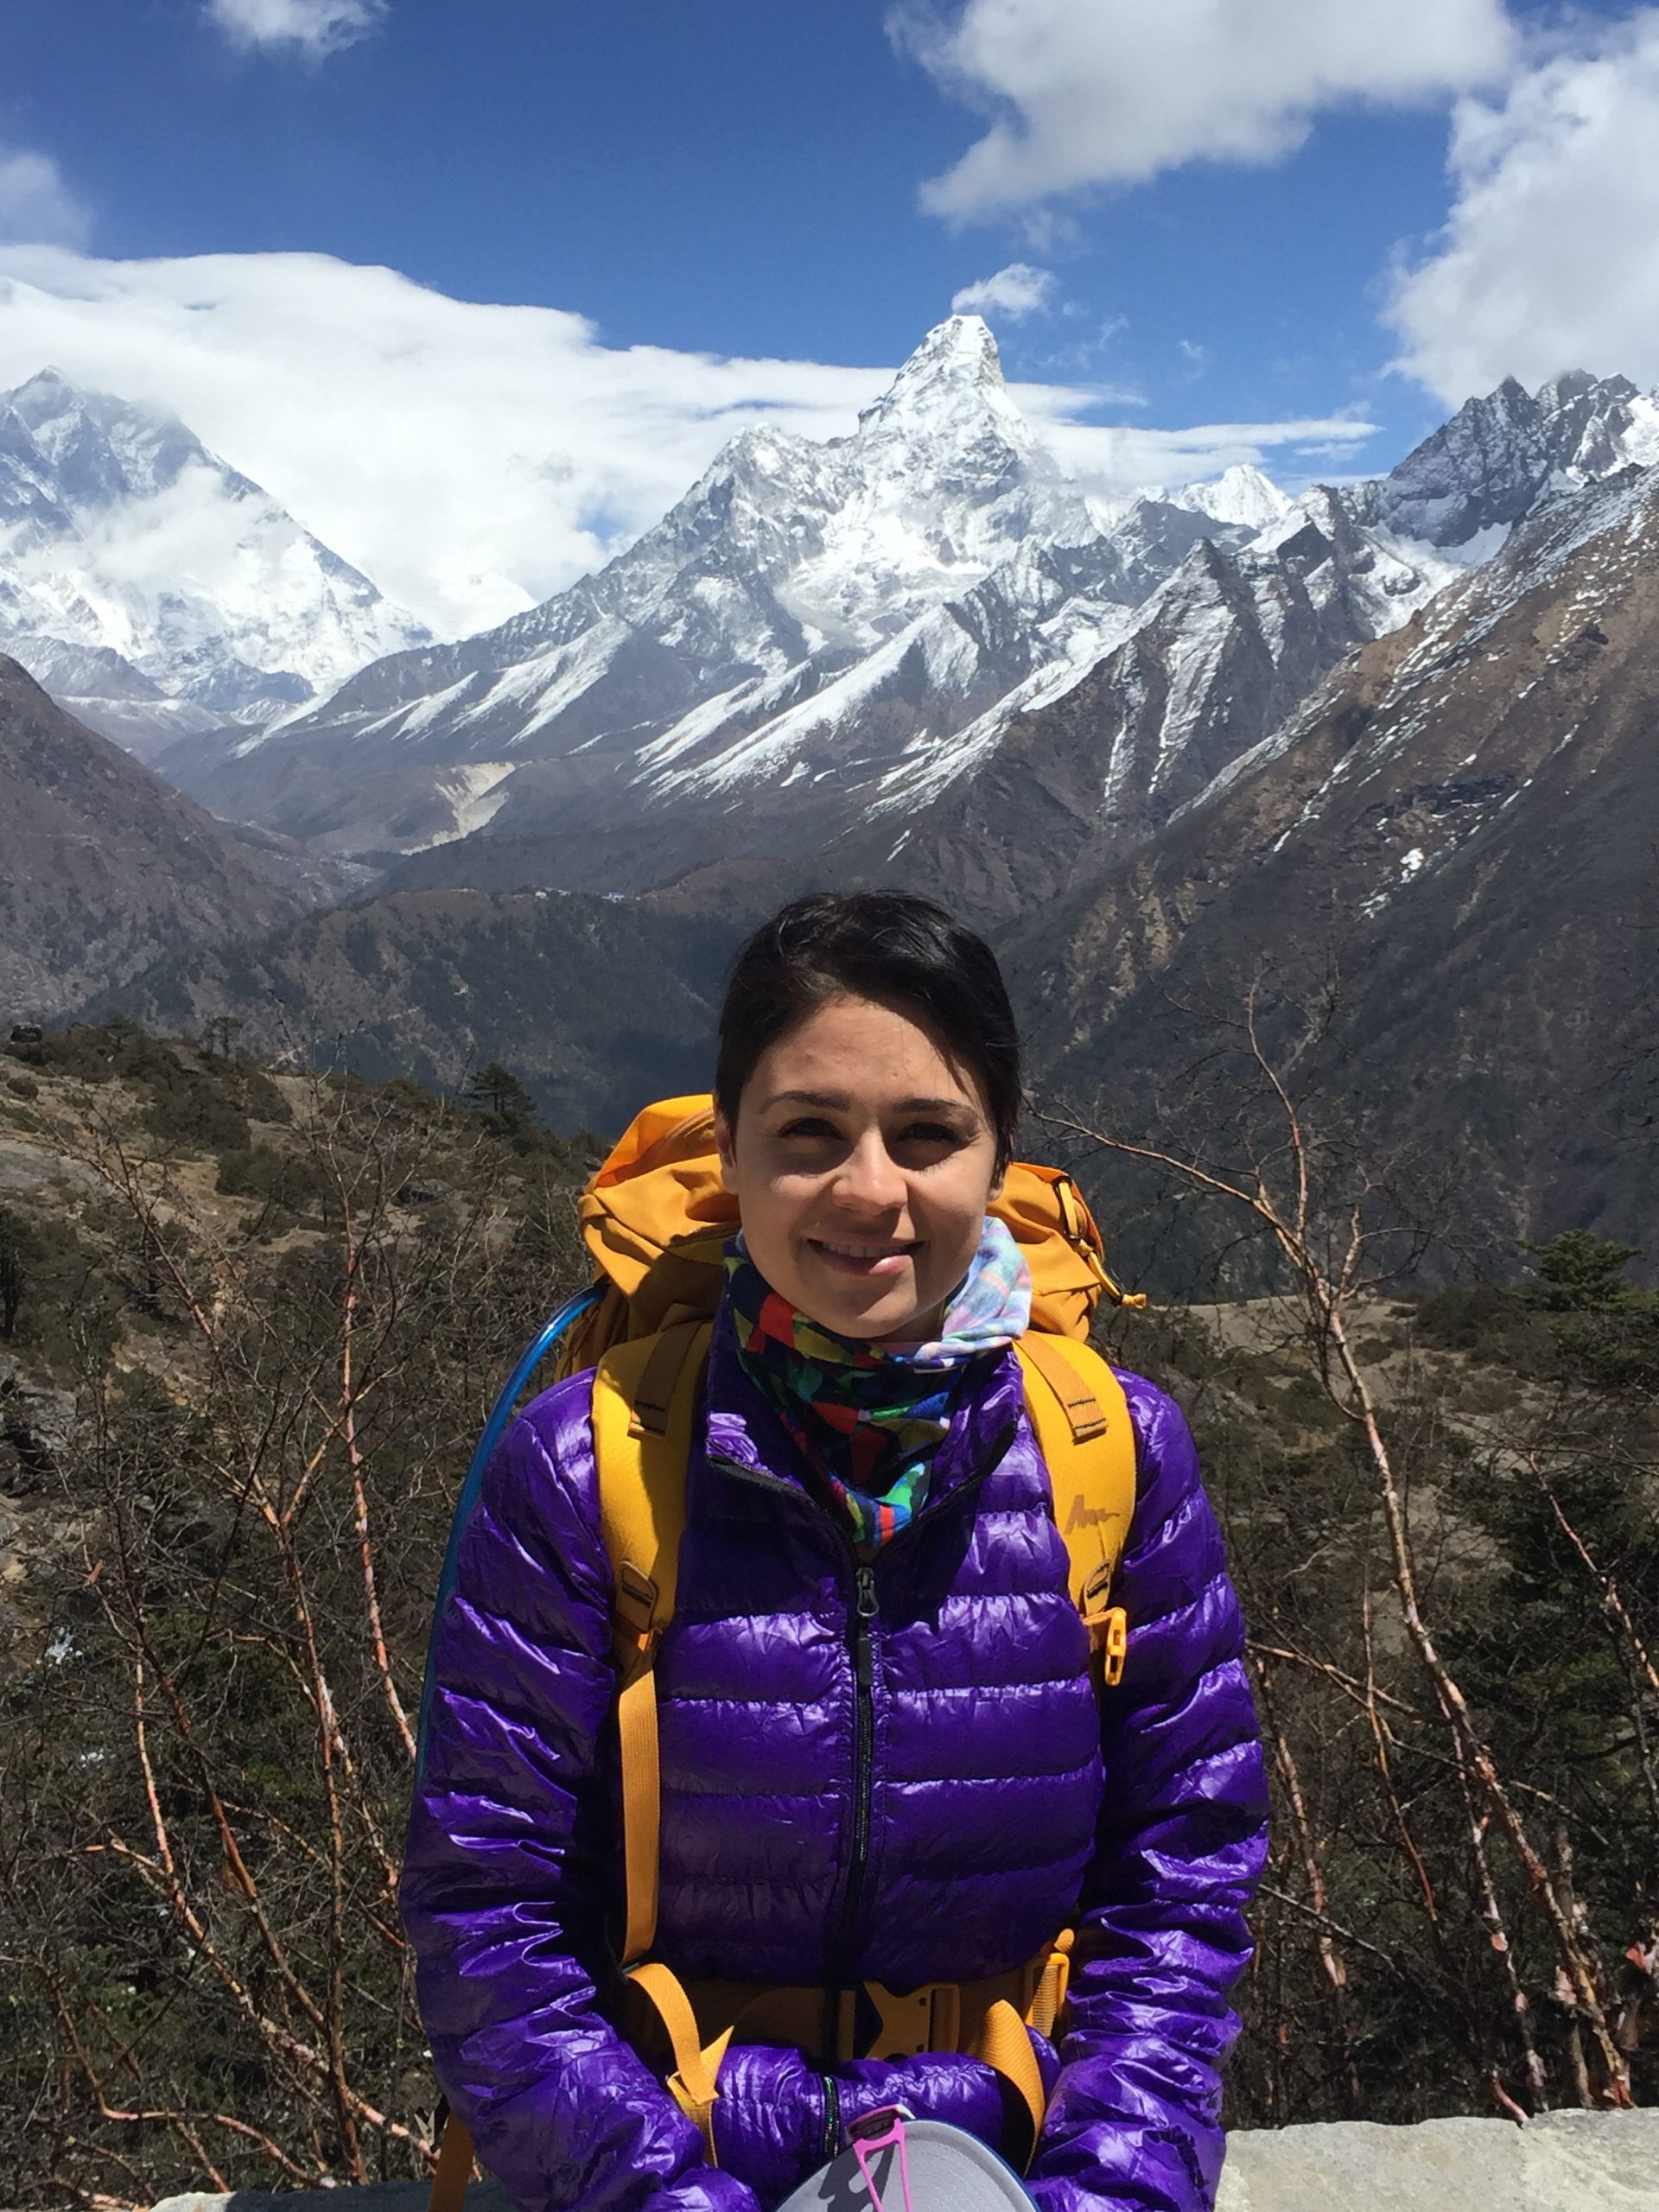 Climb your Everest presented by Dr. Sara Safari